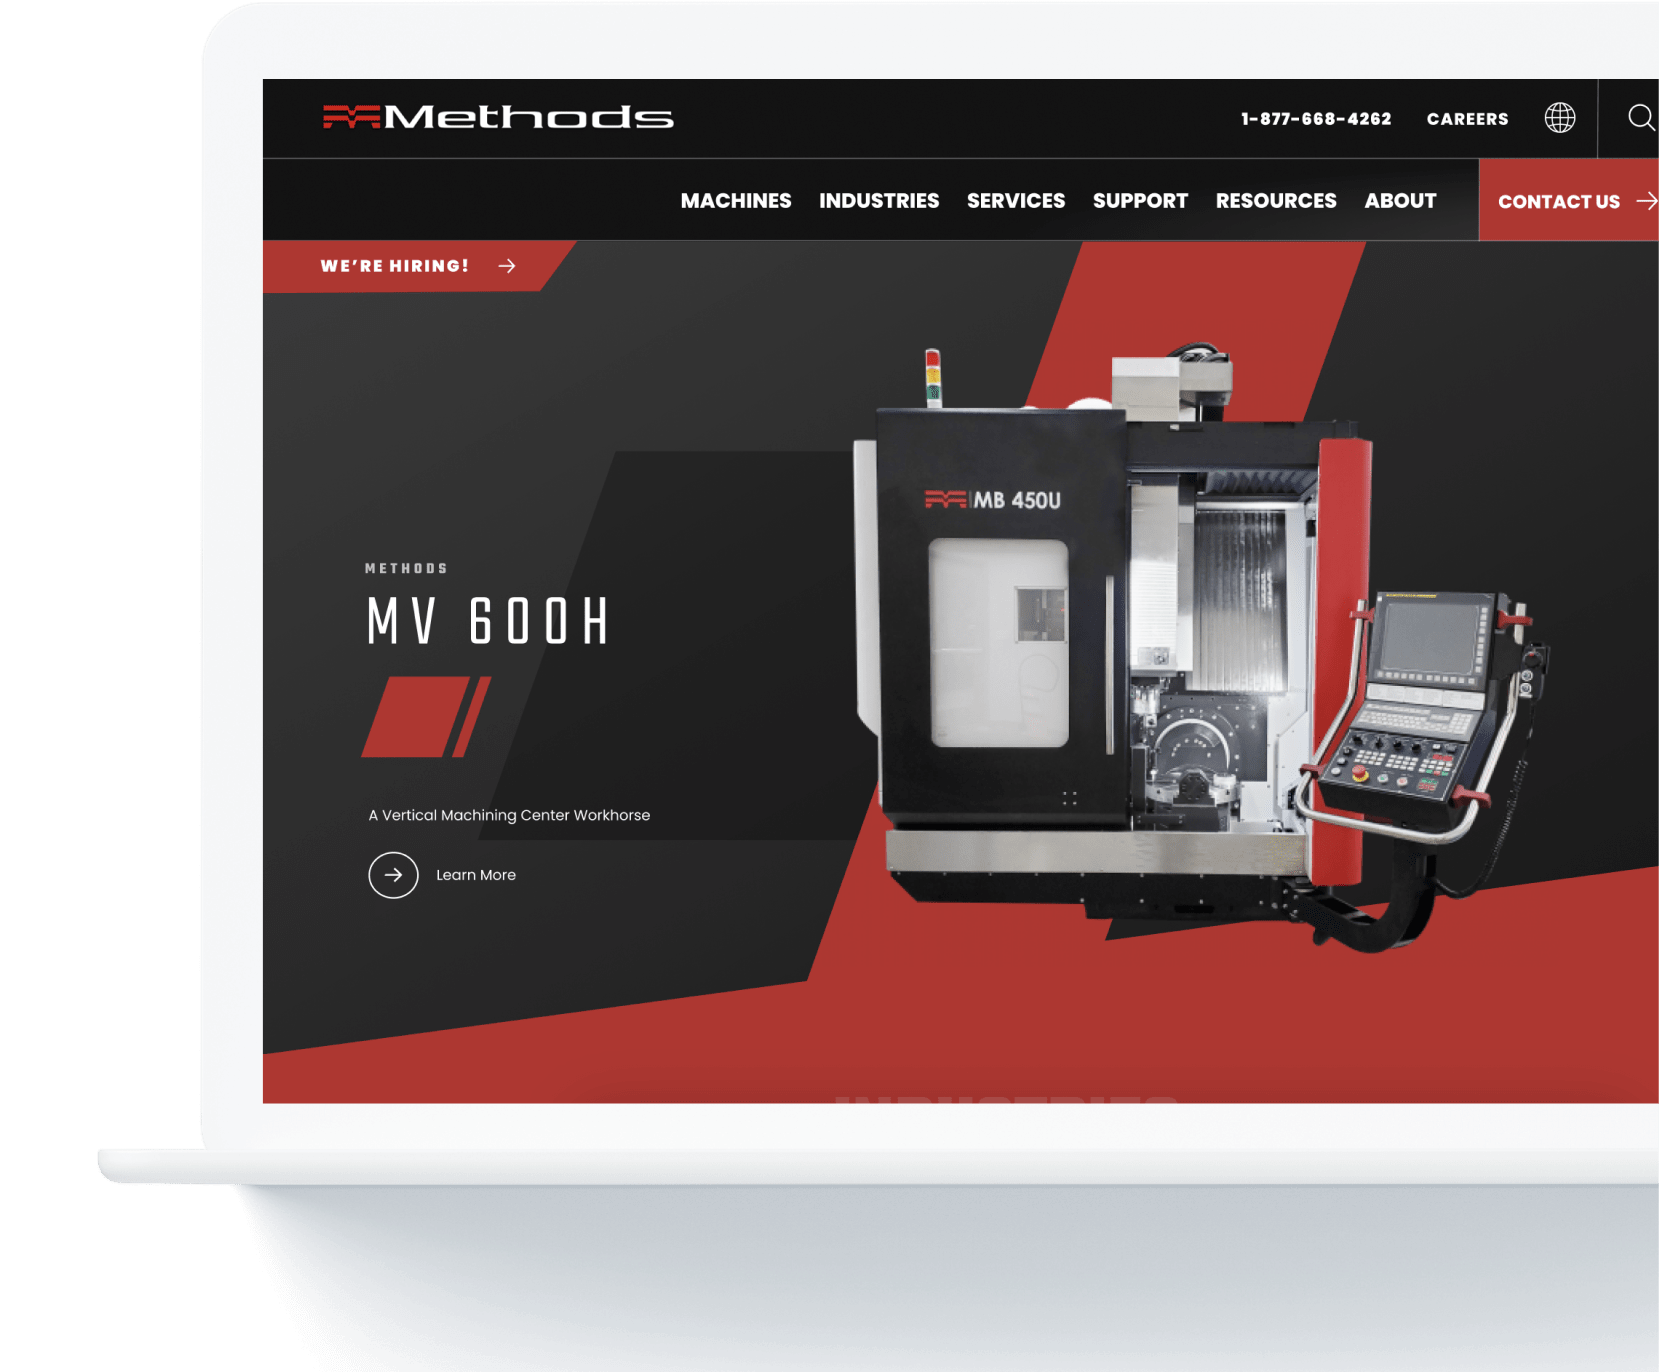 Screenshot of the methods machine tools site